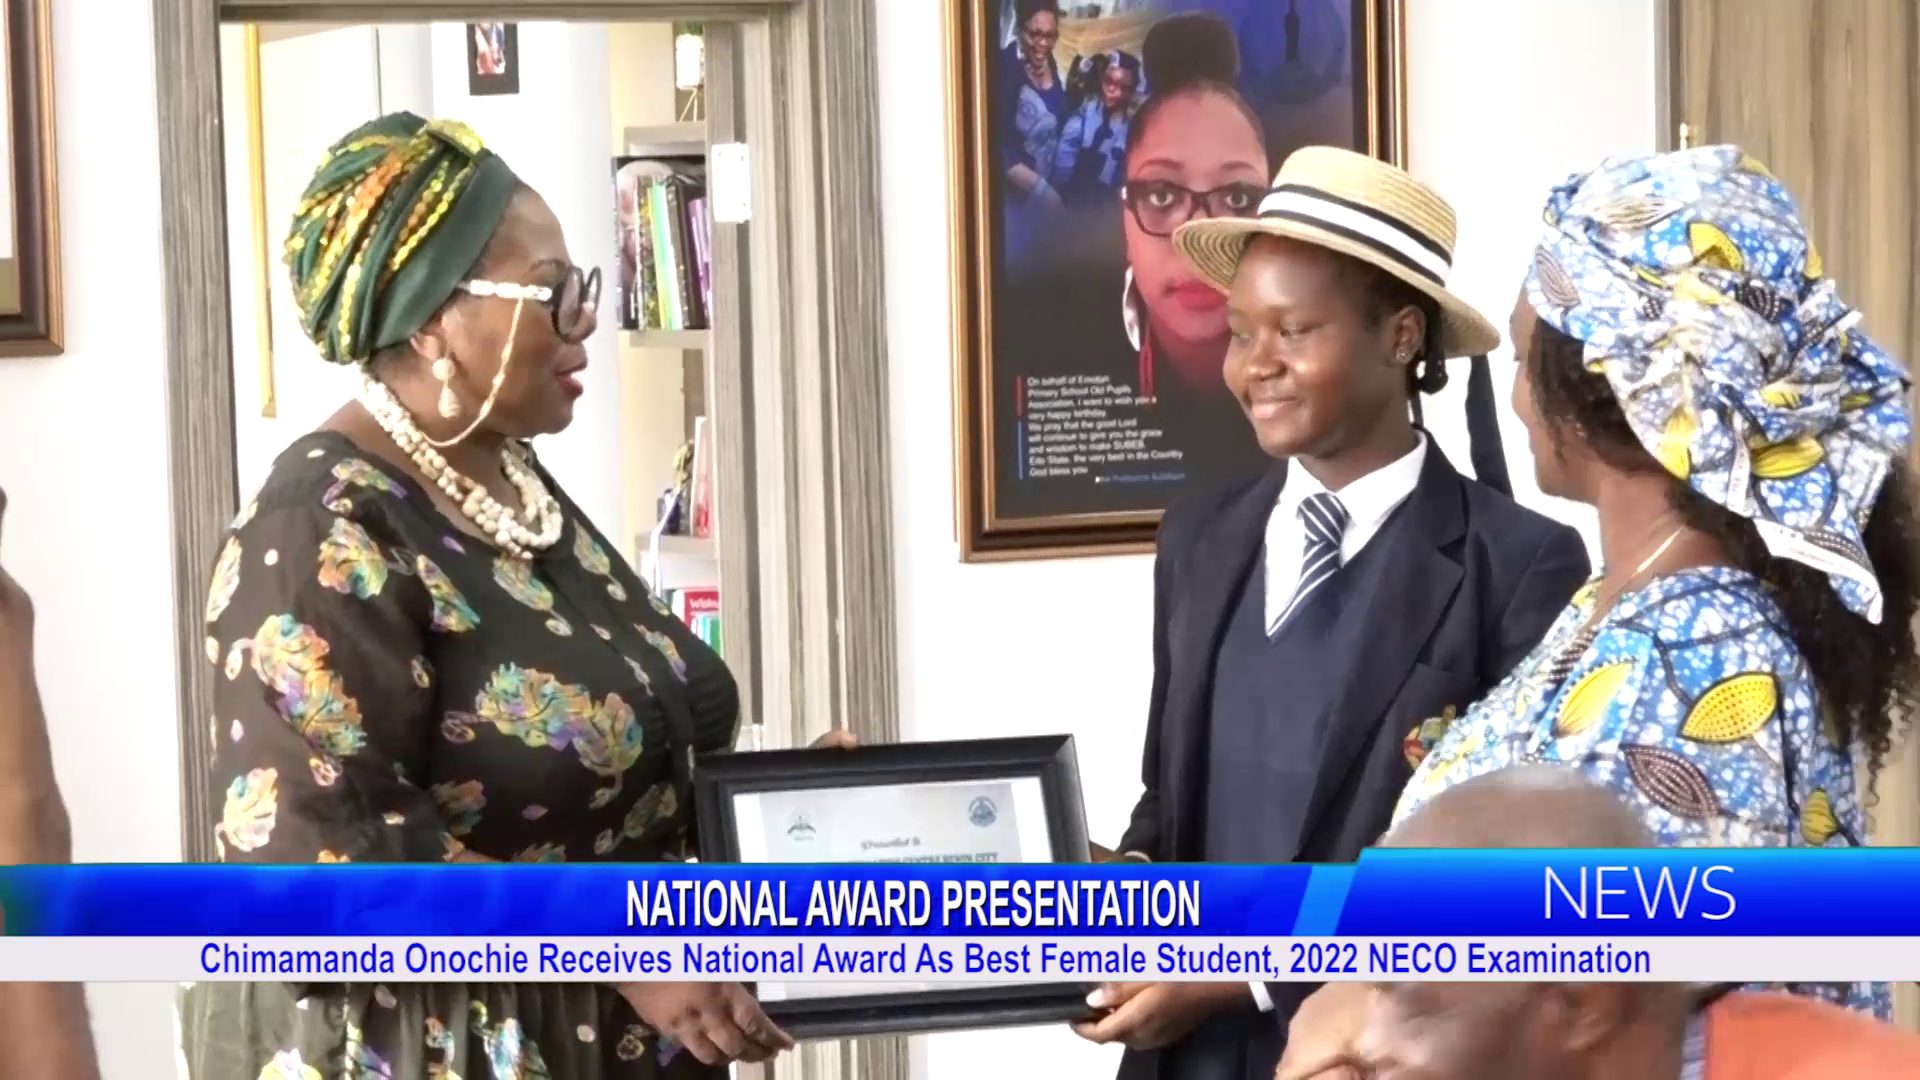 Chimamanda Onochie Receives National Award As Best Female Student, 2022 NECO Examination